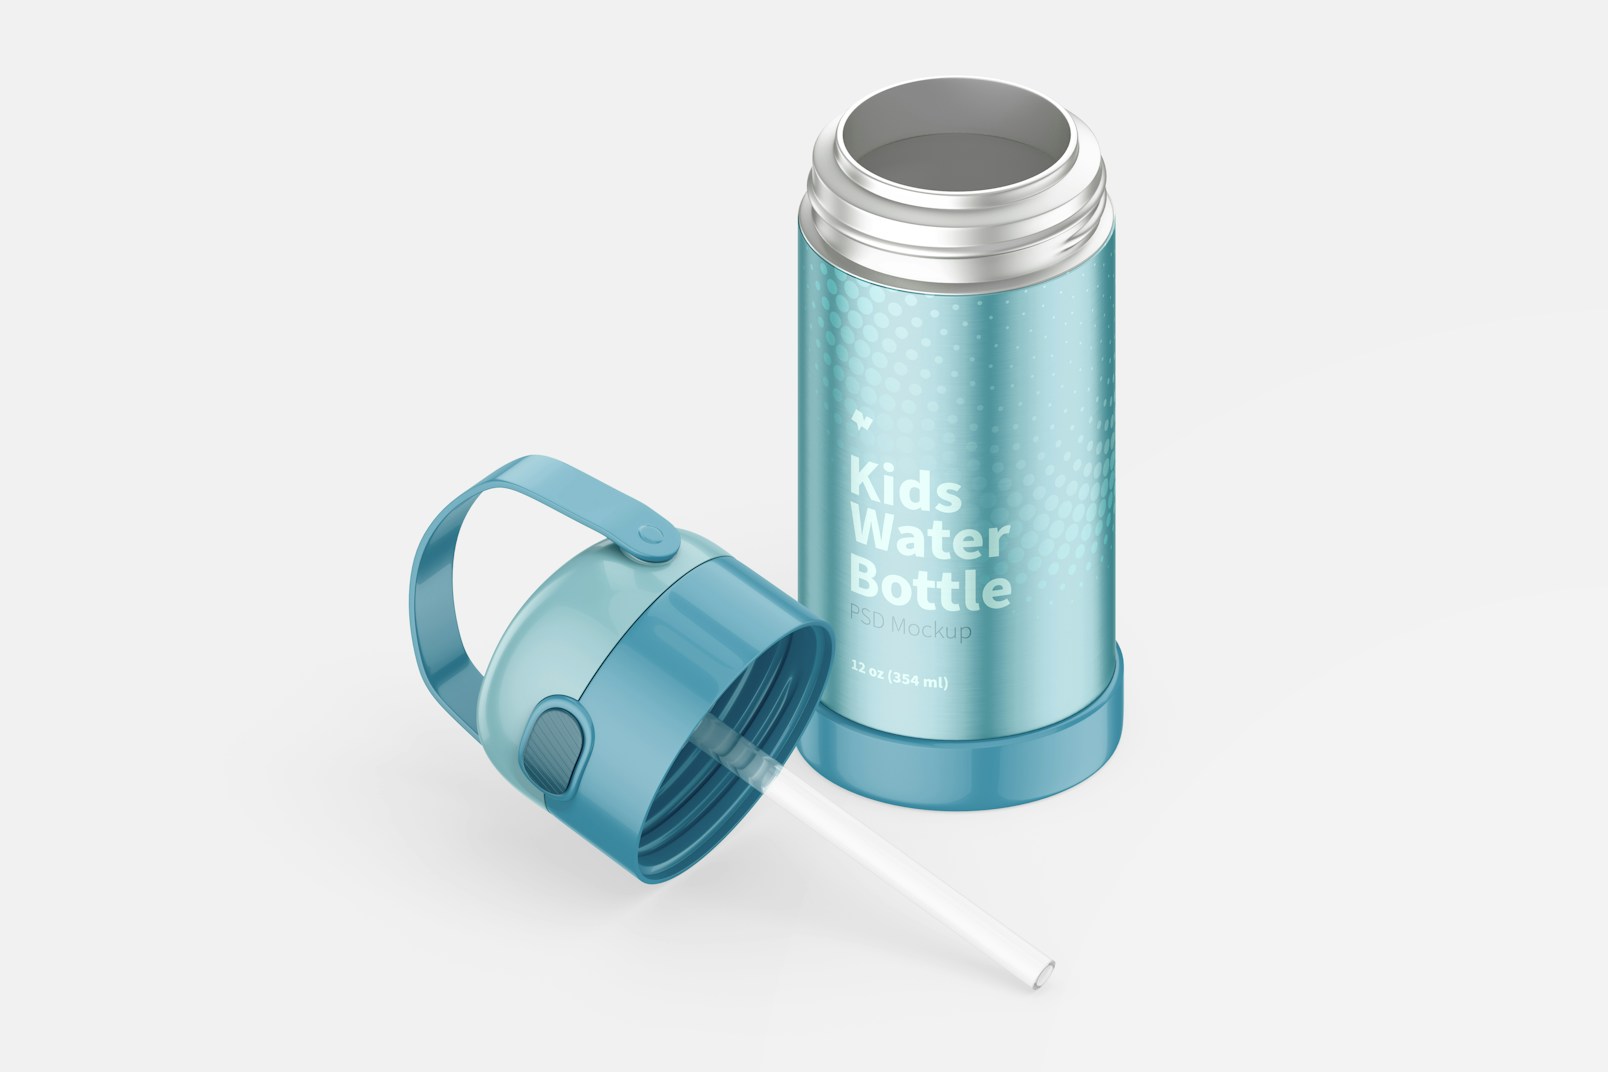 12 oz Kids Water Bottle Mockup, Isometric Opened View